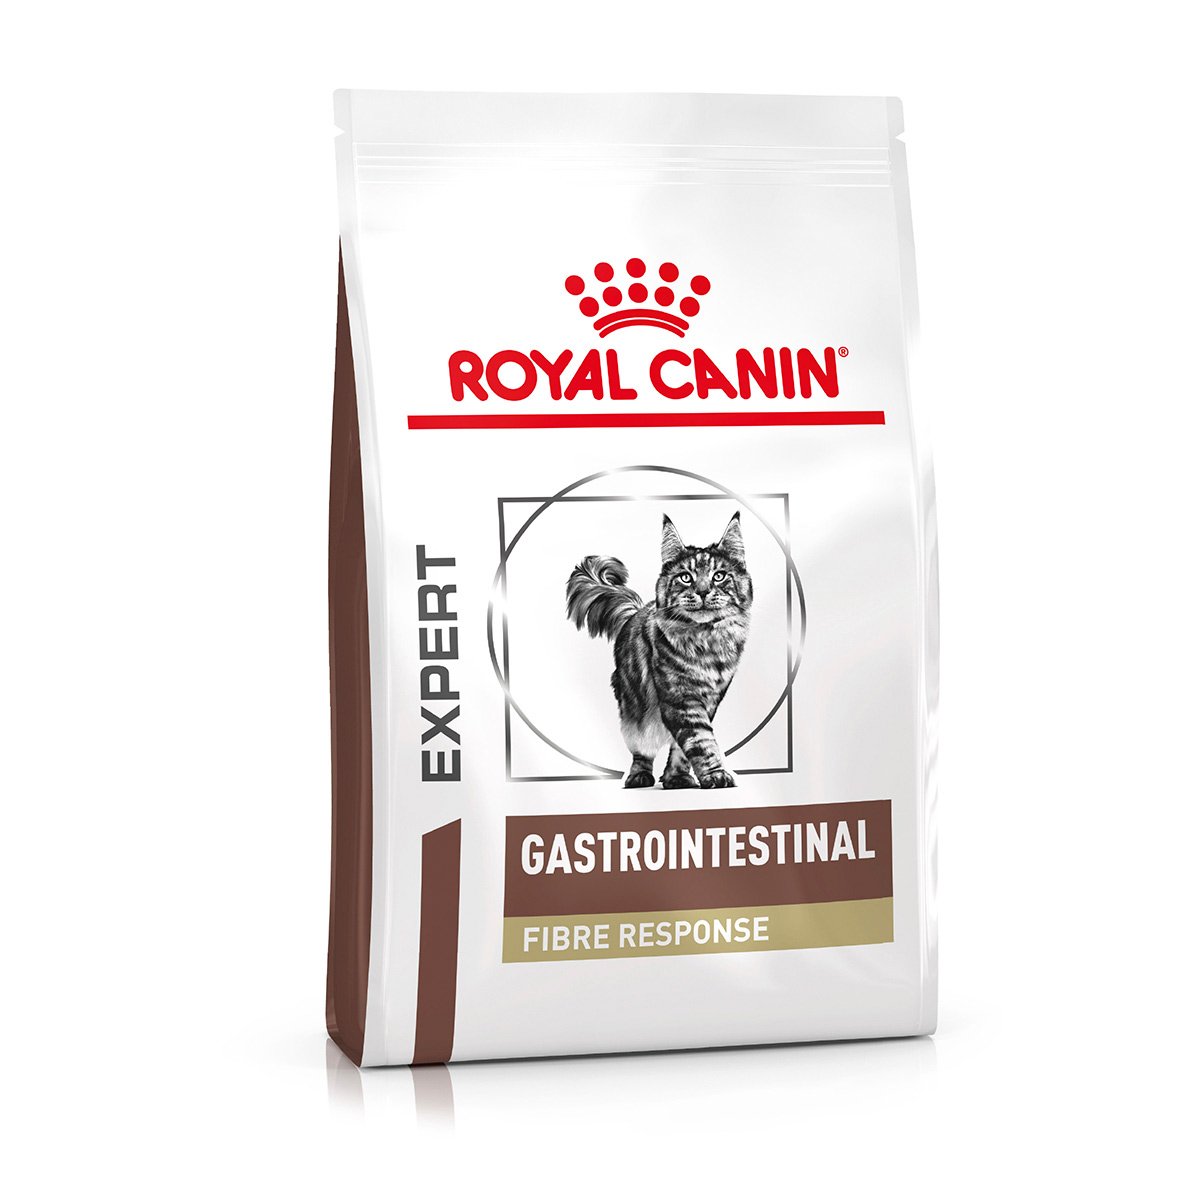 ROYAL CANIN® Veterinary GASTROINTESTINAL FIBRE RESPONSE Trockenfutter für Katzen 2kg von Royal Canin